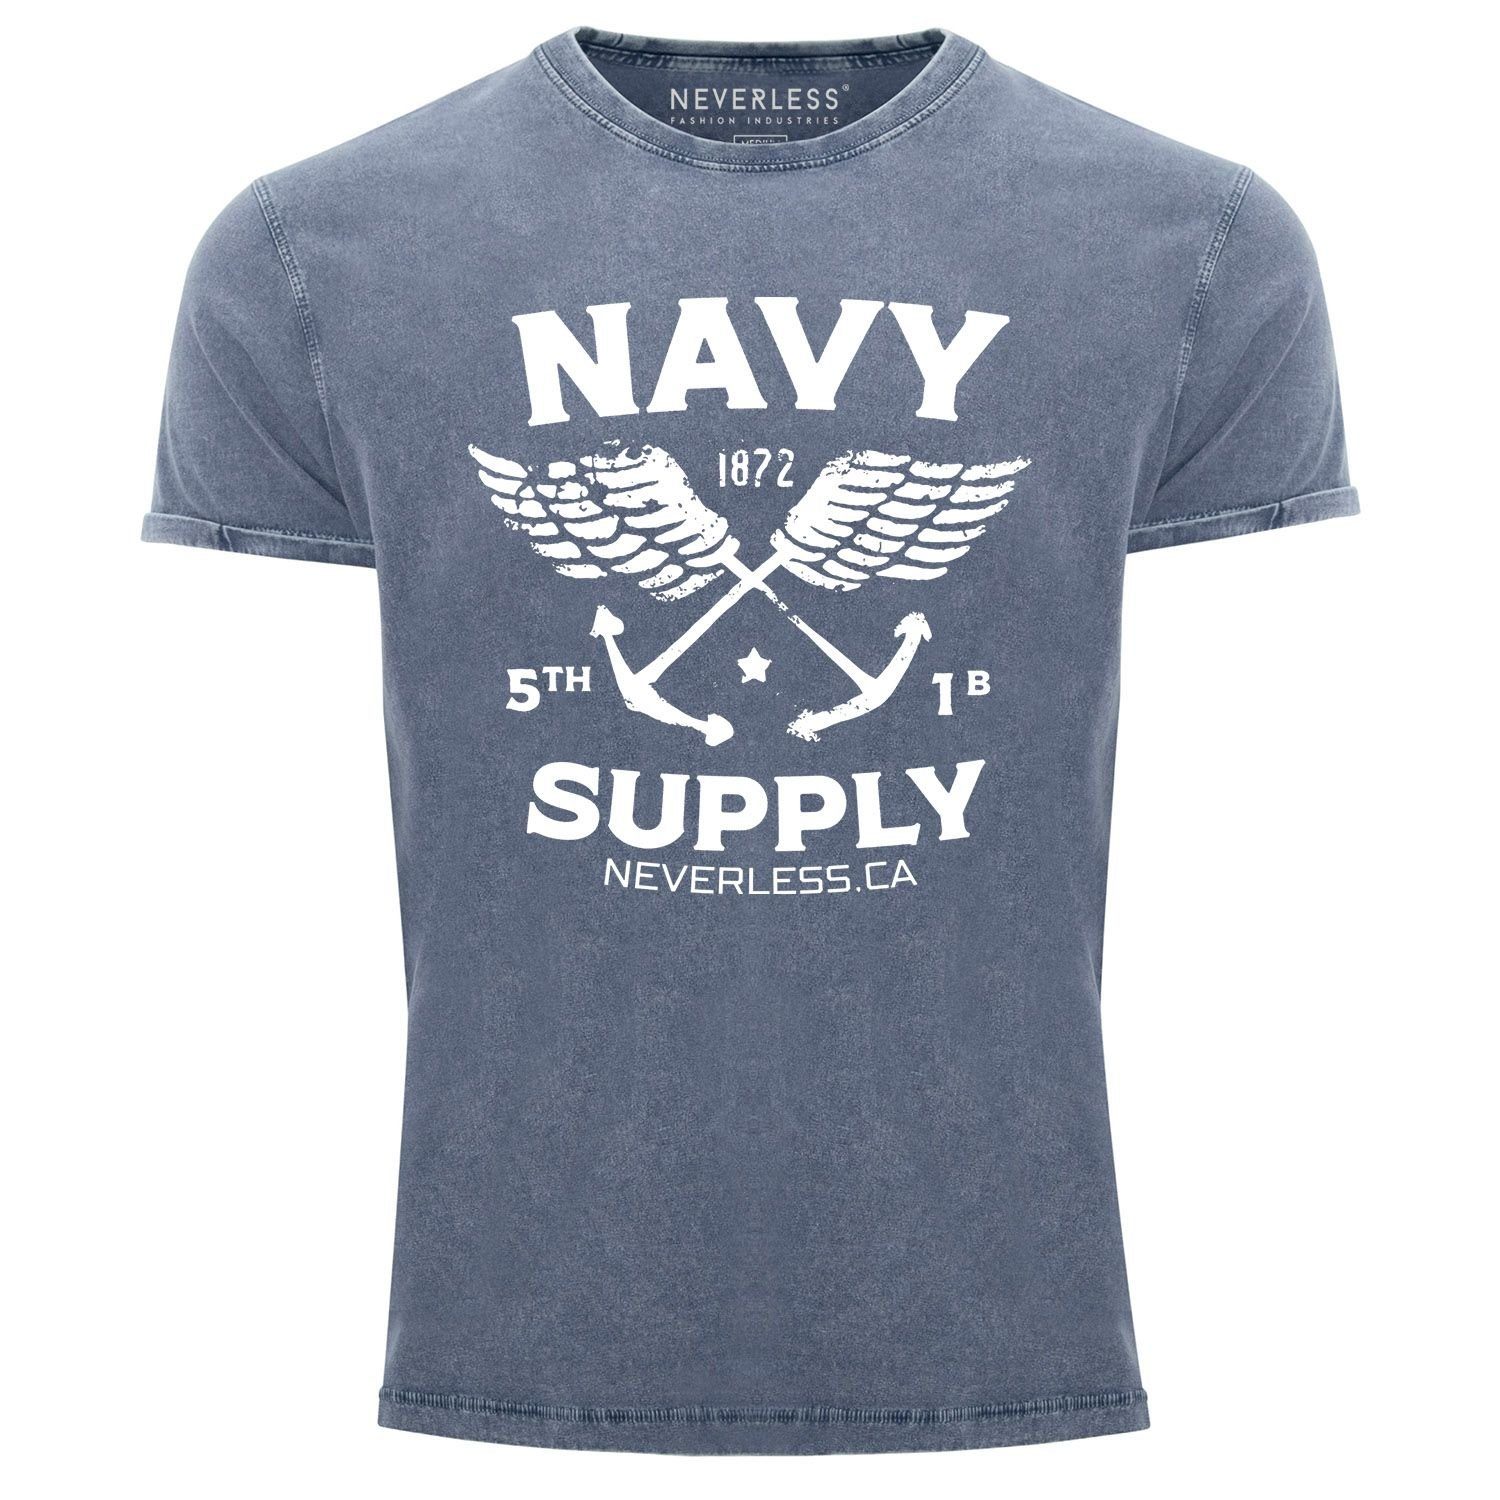 Neverless Print-Shirt Neverless® Herren T-Shirt Vintage Shirt Printshirt Anker Navy Supply Used Look Slim Fit mit Print blau